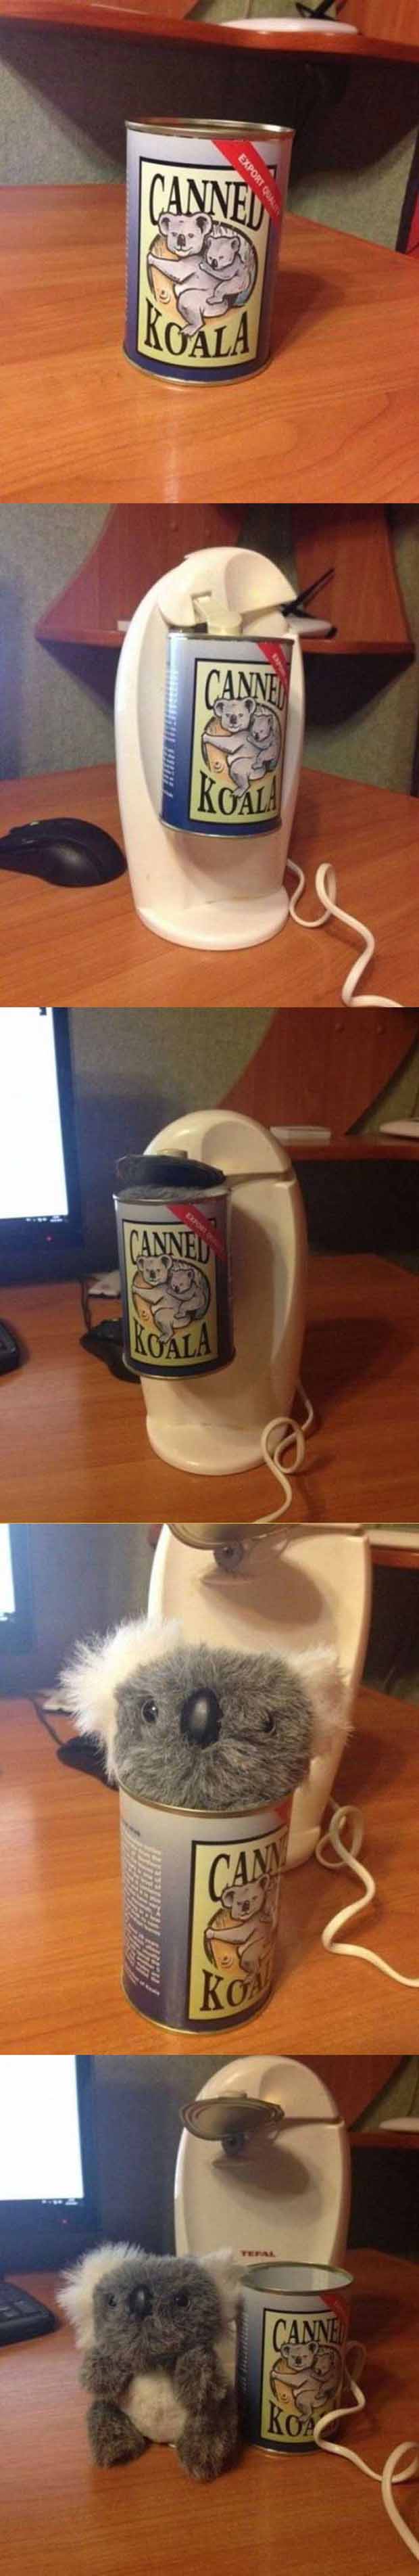 funny-canned-Koala-bear-toy